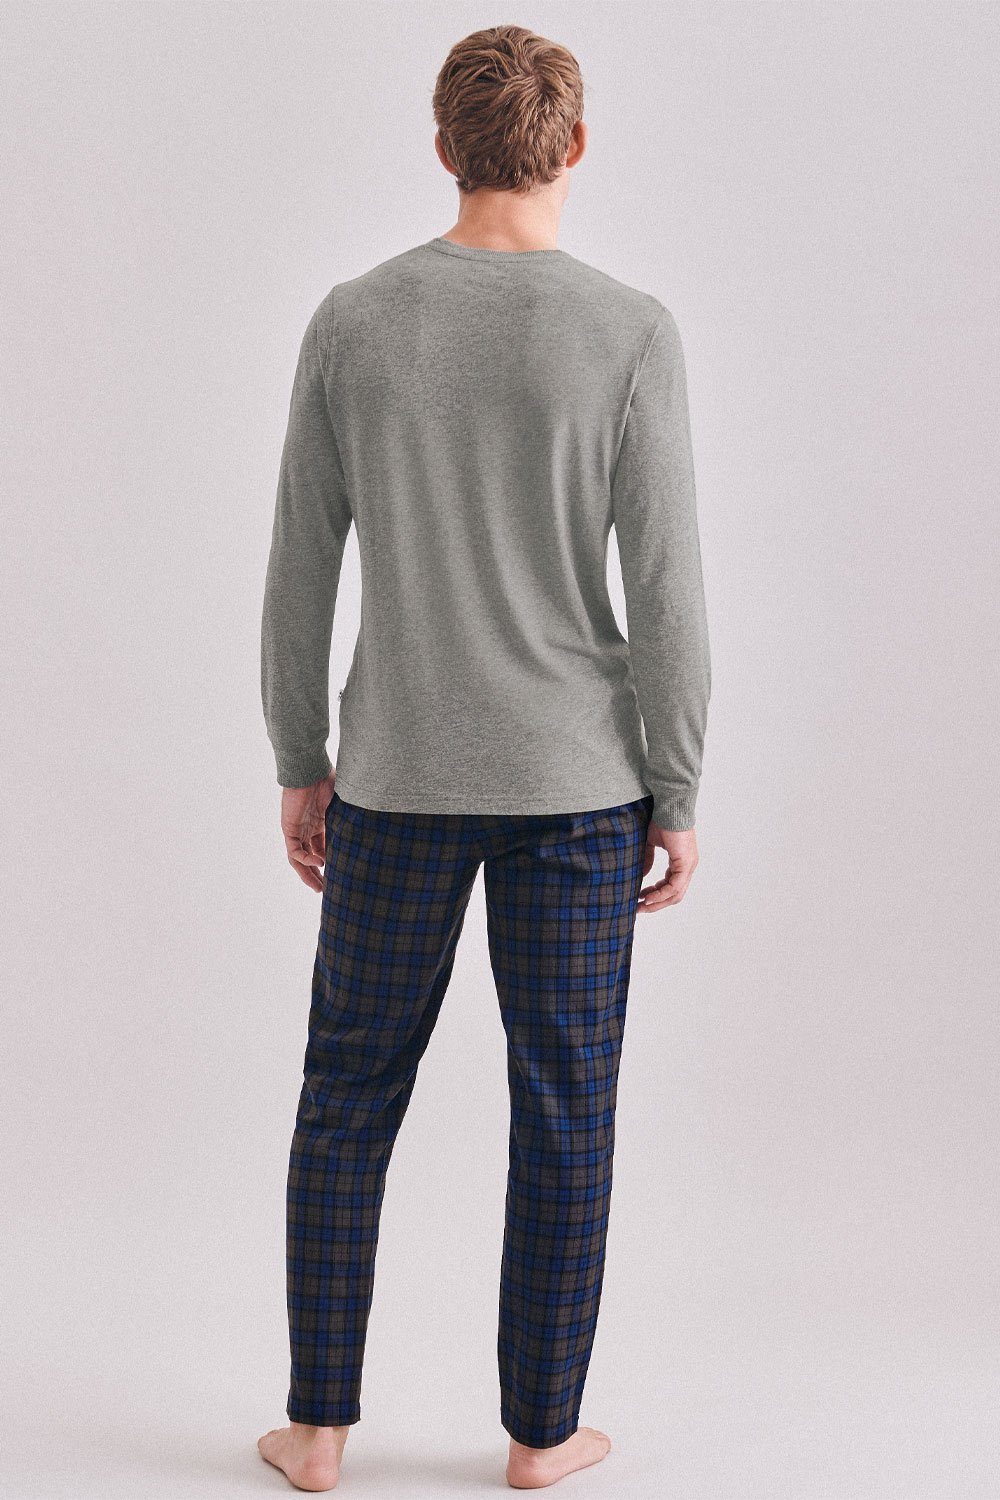 Mix & olive check Match Pyjama 100006 grey/navy Pyjama seidensticker